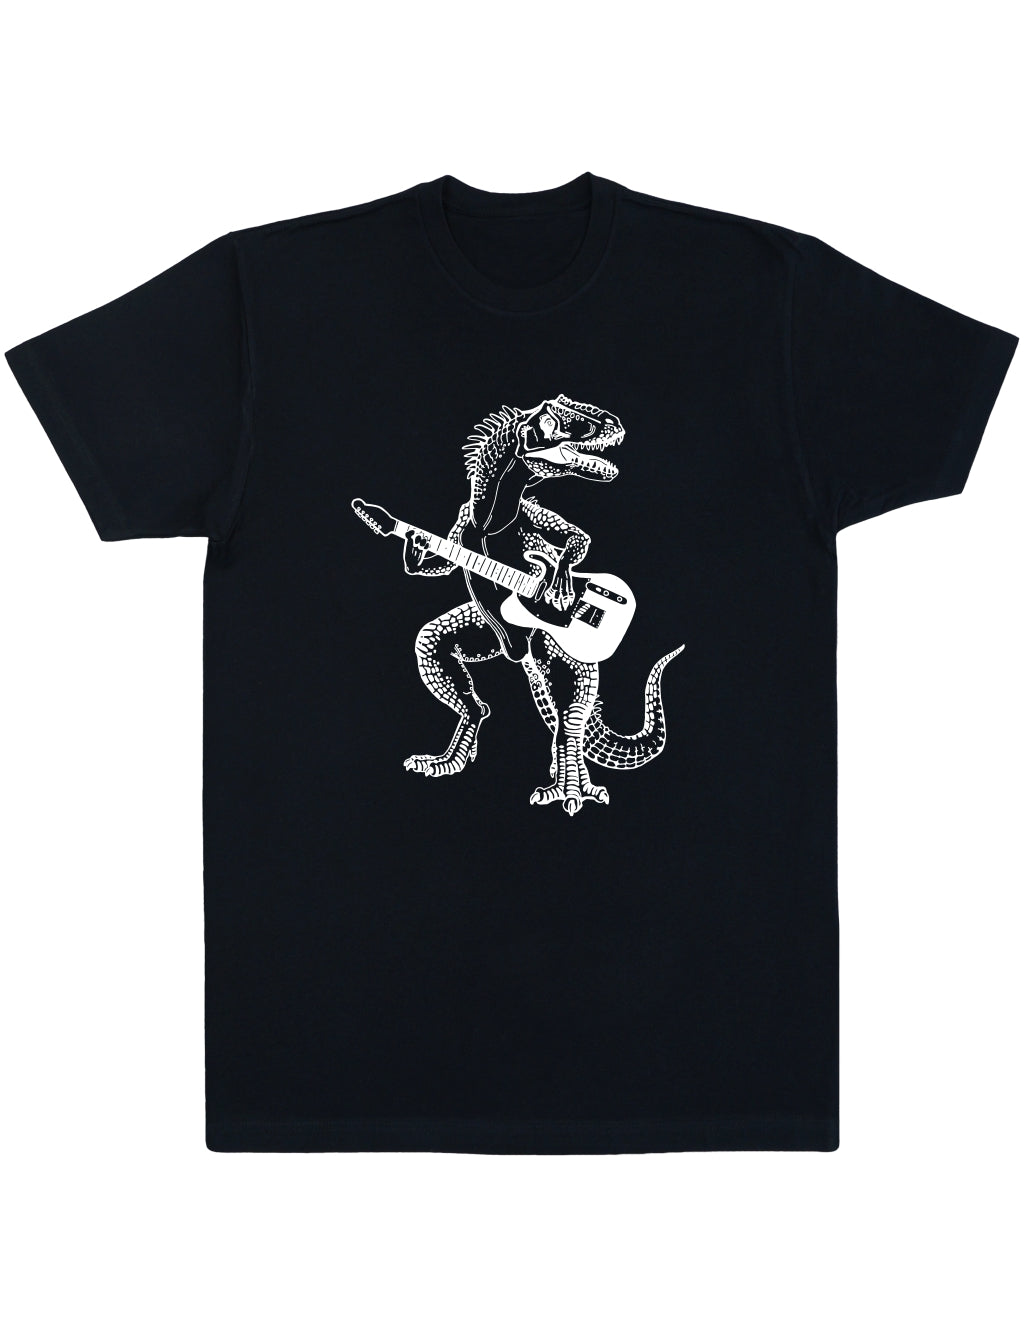 SEEMBO Dinosaur Playing Guitar Men's Cotton T-Shirt